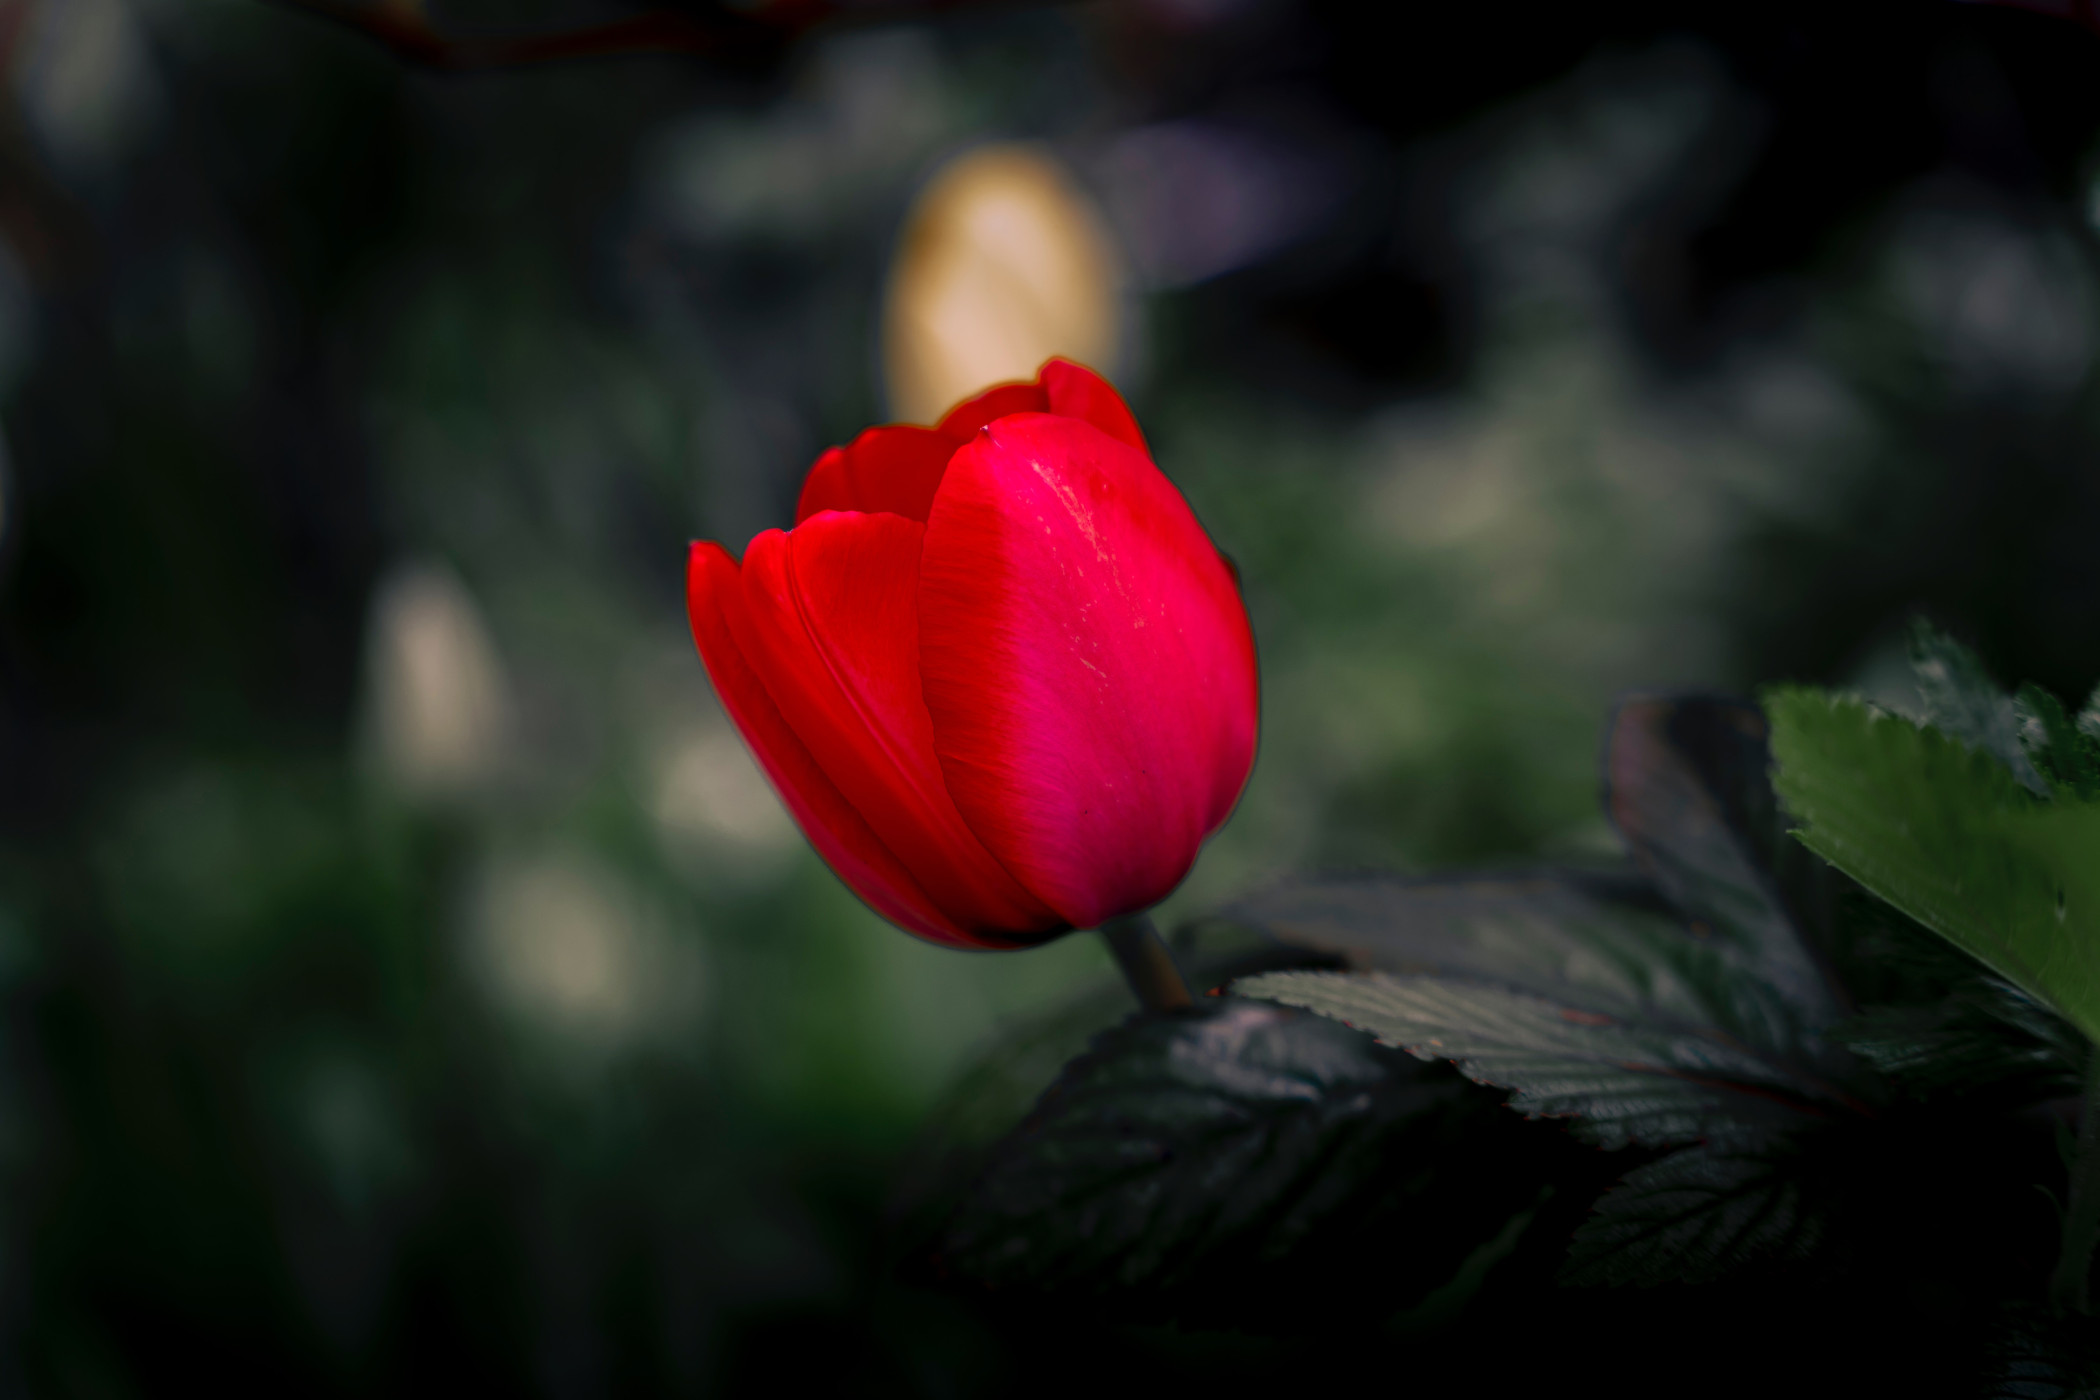 tulipan rojo